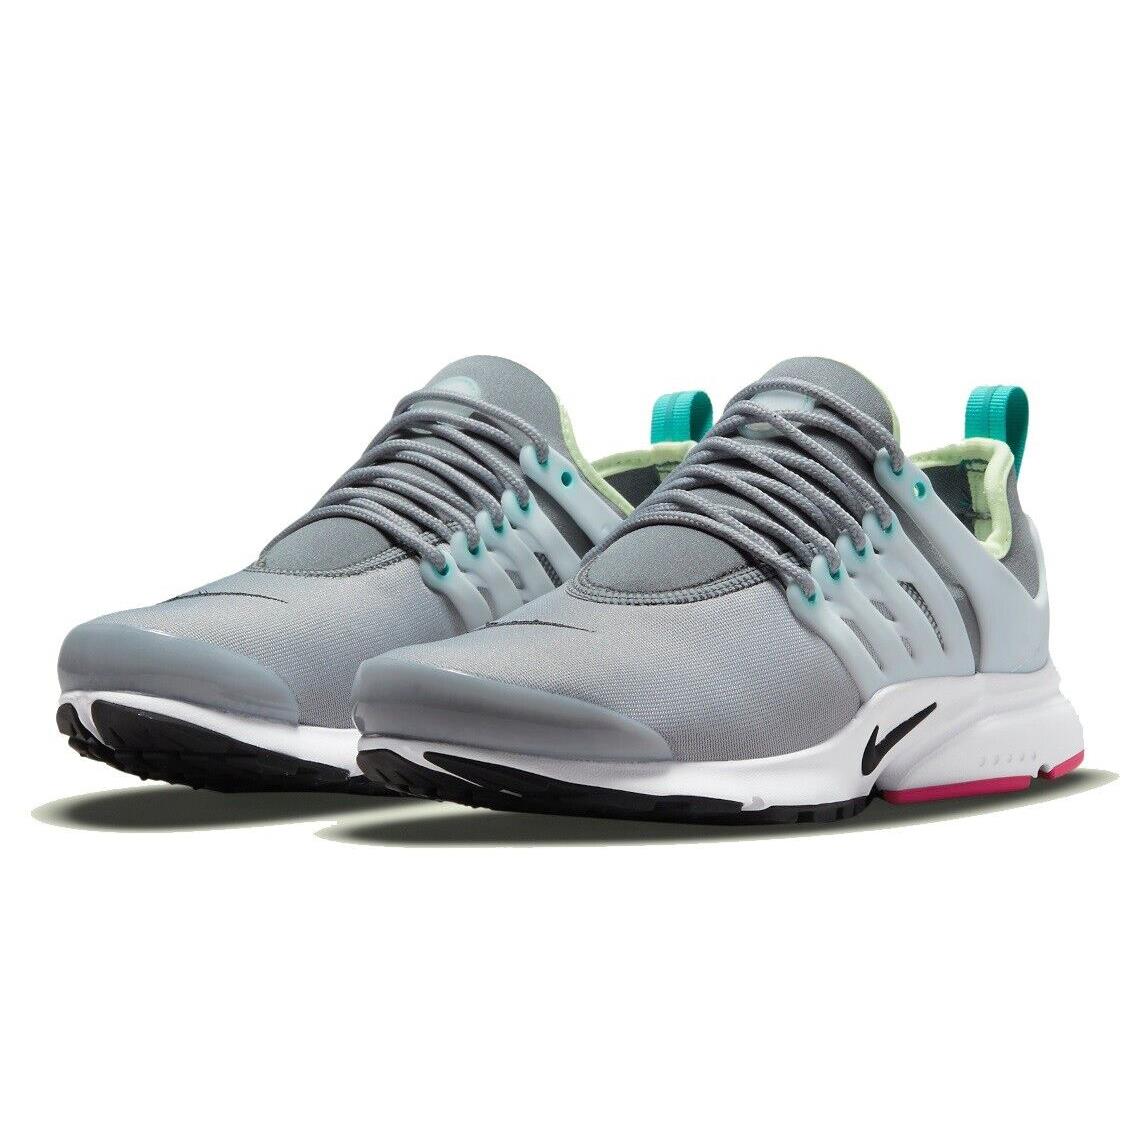 Nike Air Presto Womens Size 7 Sneaker Shoes 878068 018 Cool Grey